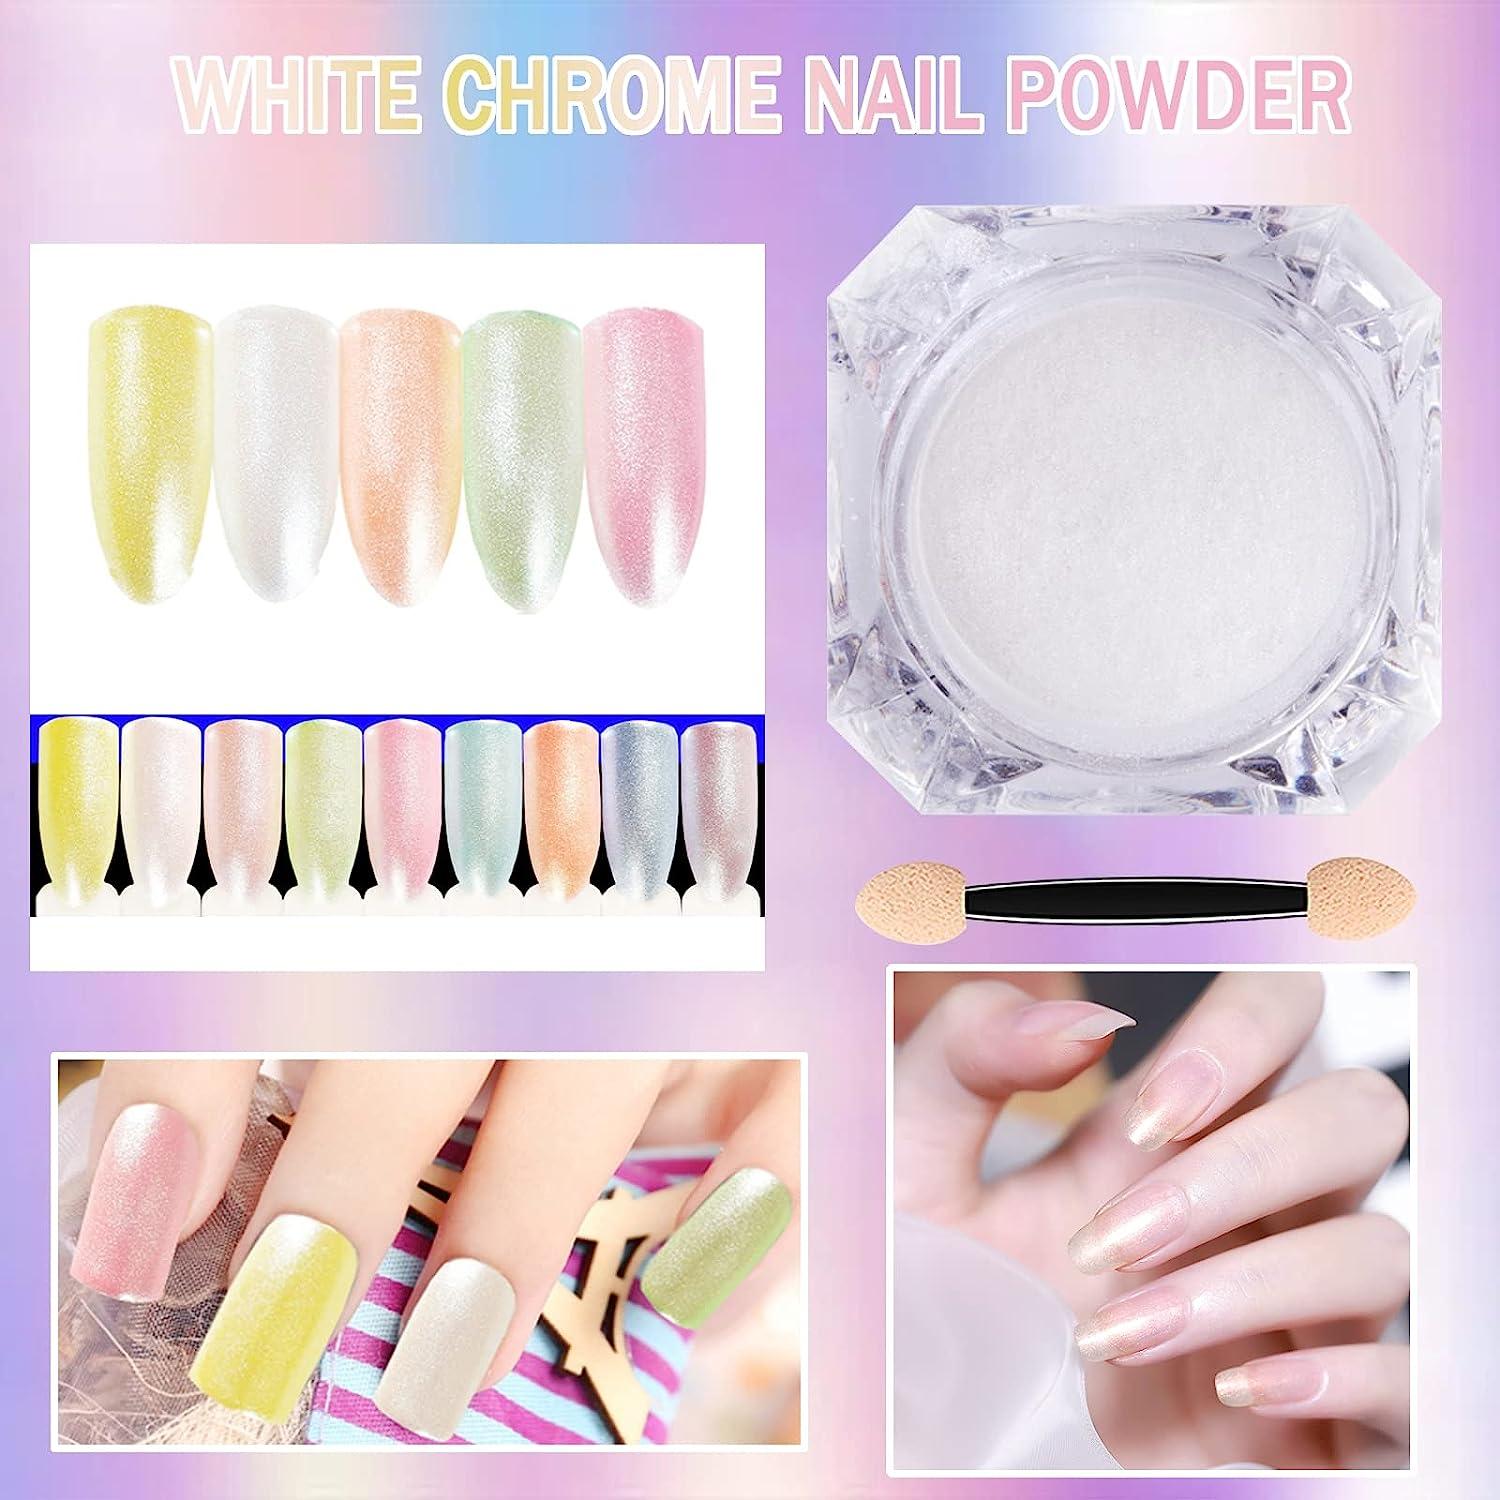 Chrome Nail Powder for Glitter Pearly Mermaid Nail Designs